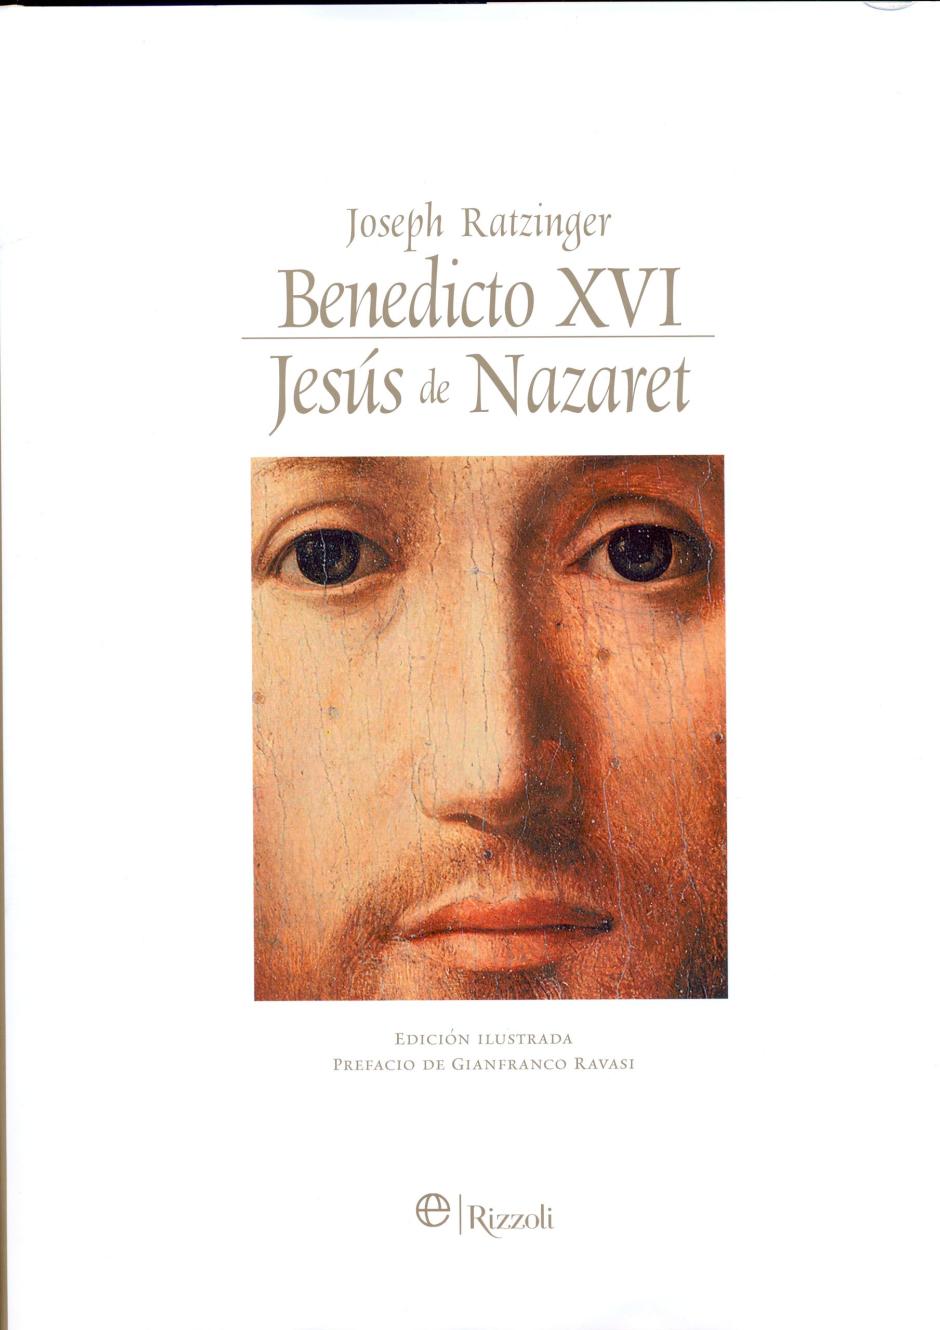 Jesús de Nazaret de Joseph Ratzinger, papa Benedicto XVI